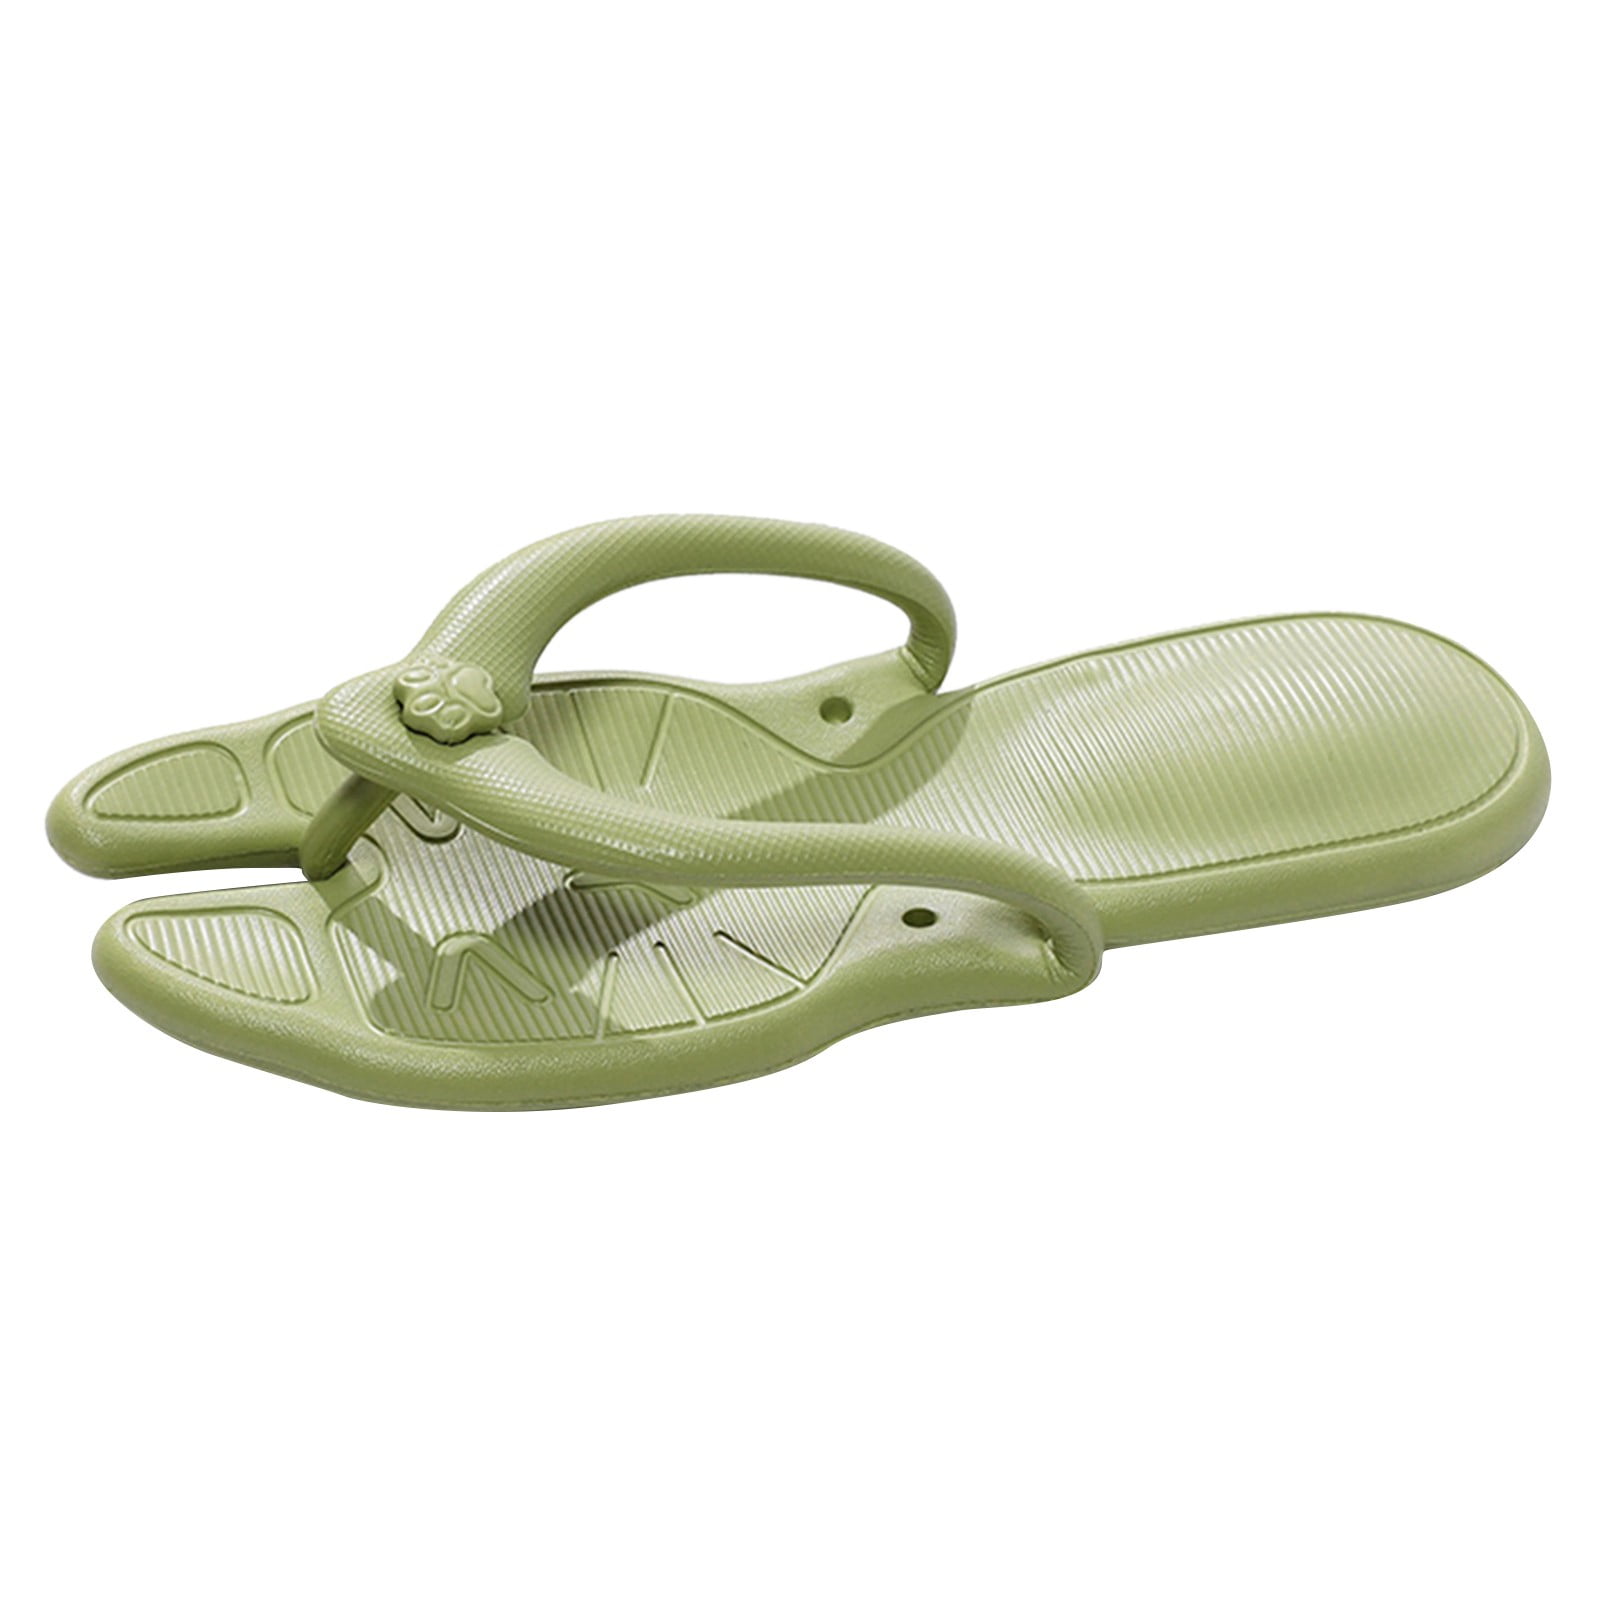 WEAIXIMIUNG Men s Sandals Men Shoes Couple Travel Portable Bathroom Slippers Comfortable Sof t Sole Foldable Flip Flops 36d8964c 45cf 447a b674 93b817889389.16c9da373be4b59079028f96a3ae94e4